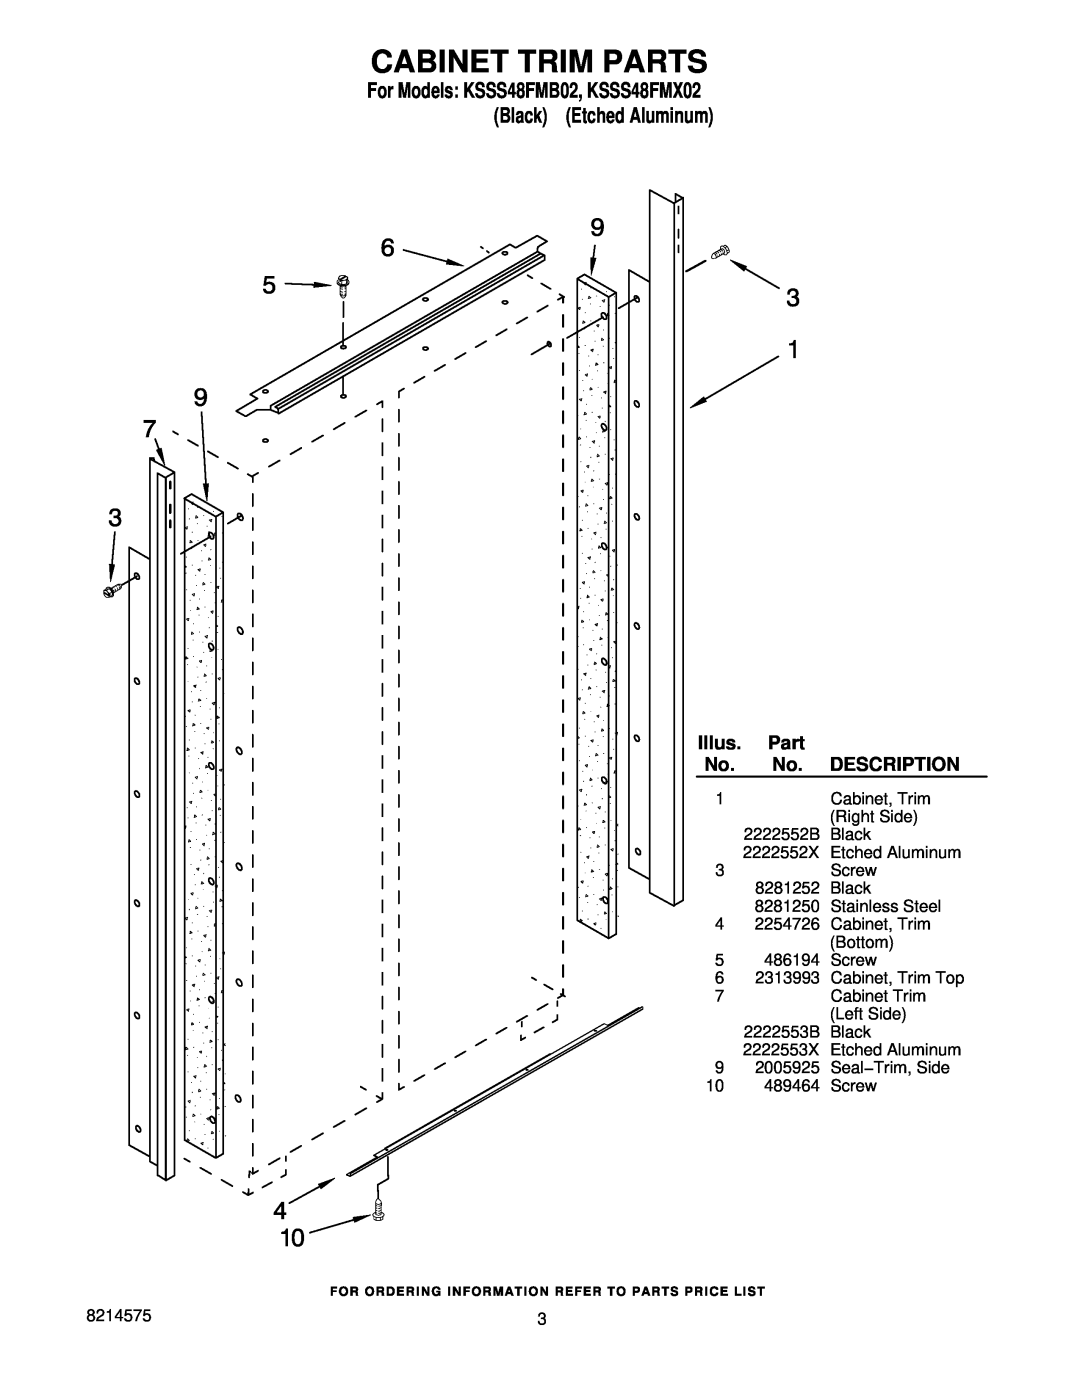 KitchenAid manual Cabinet Trim Parts, For Models KSSS48FMB02, KSSS48FMX02 Black Etched Aluminum, Illus, Description 